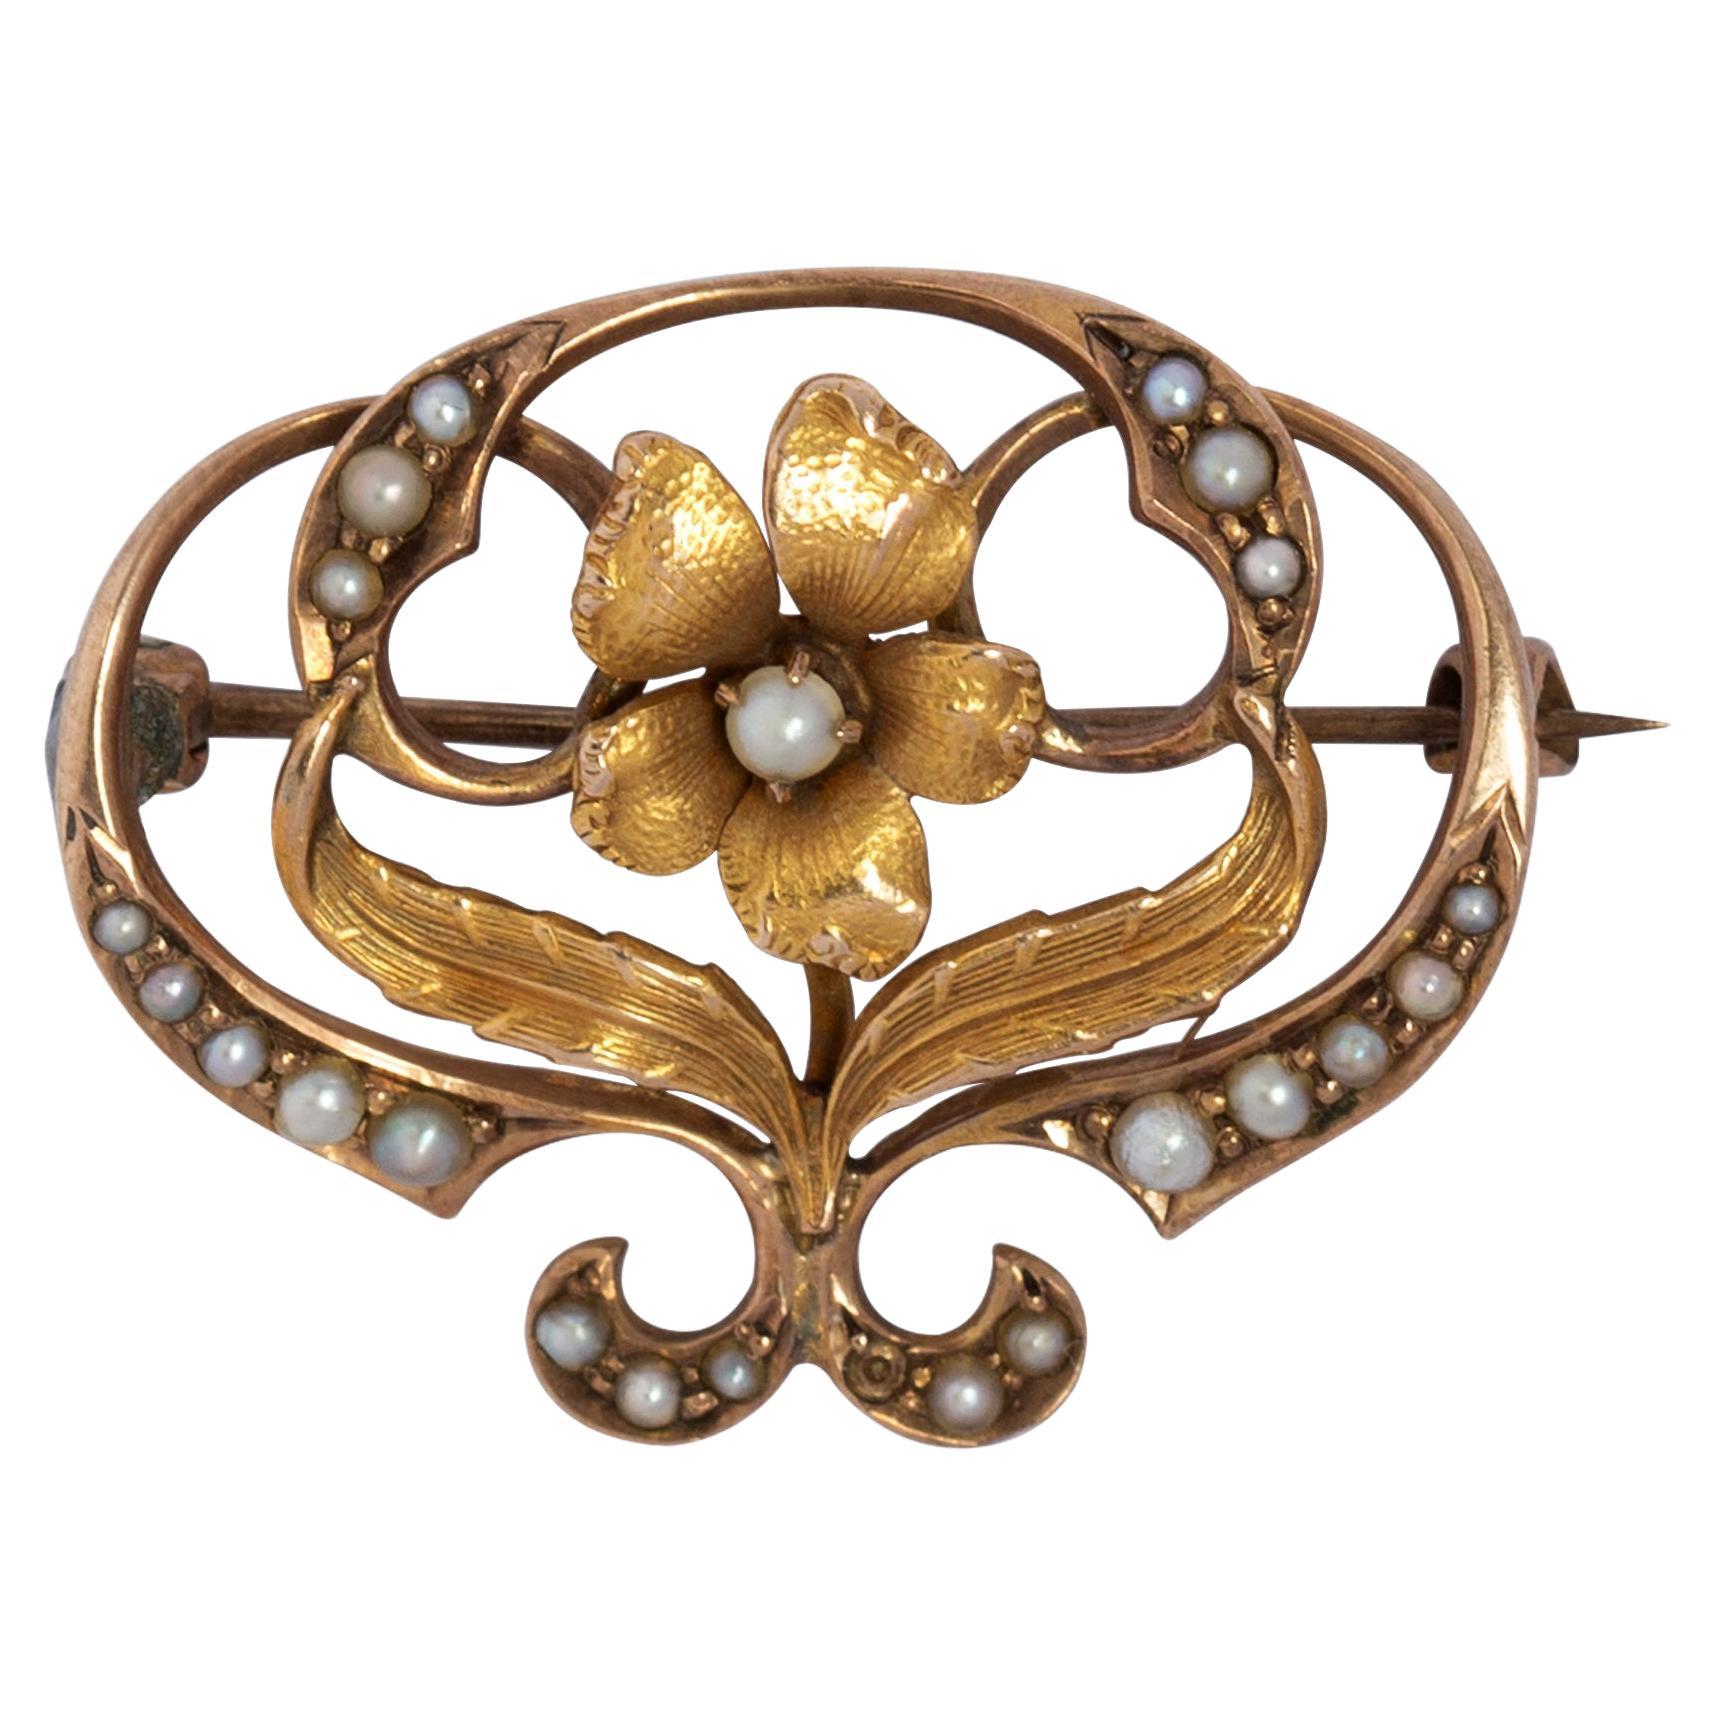 Art Nouveau Or Jaune Broche Fleur en Perles de Graines Broche